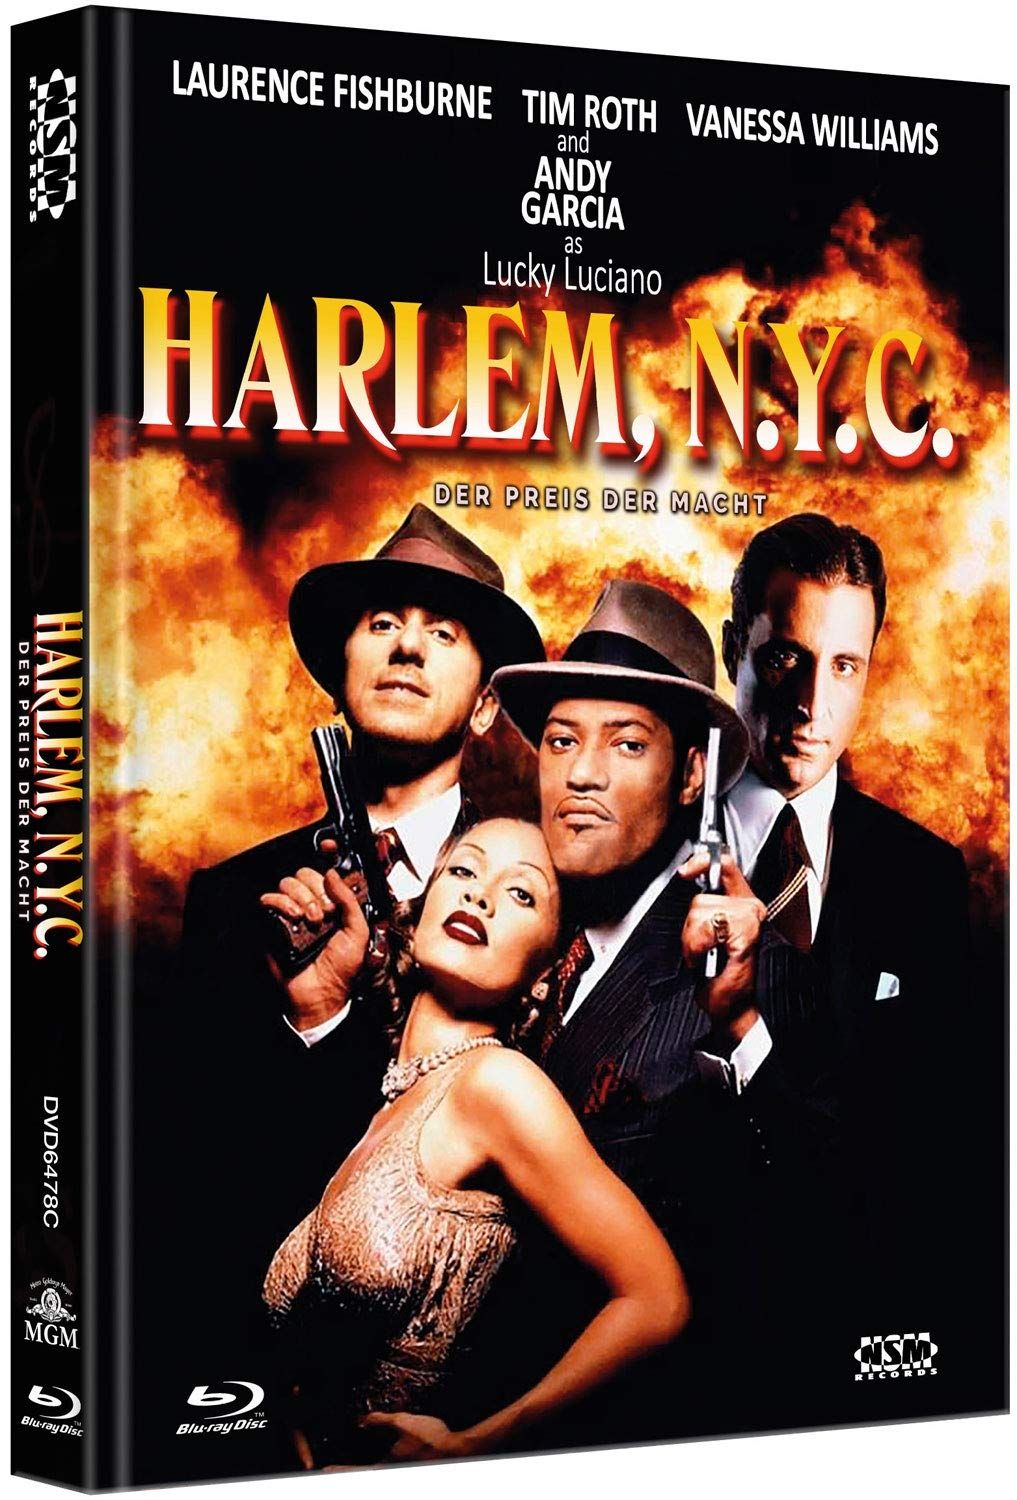 Harlem, N.Y.C. - Der Preis der Macht (Lim. Uncut Mediabook - Cover C) (DVD + BLURAY)